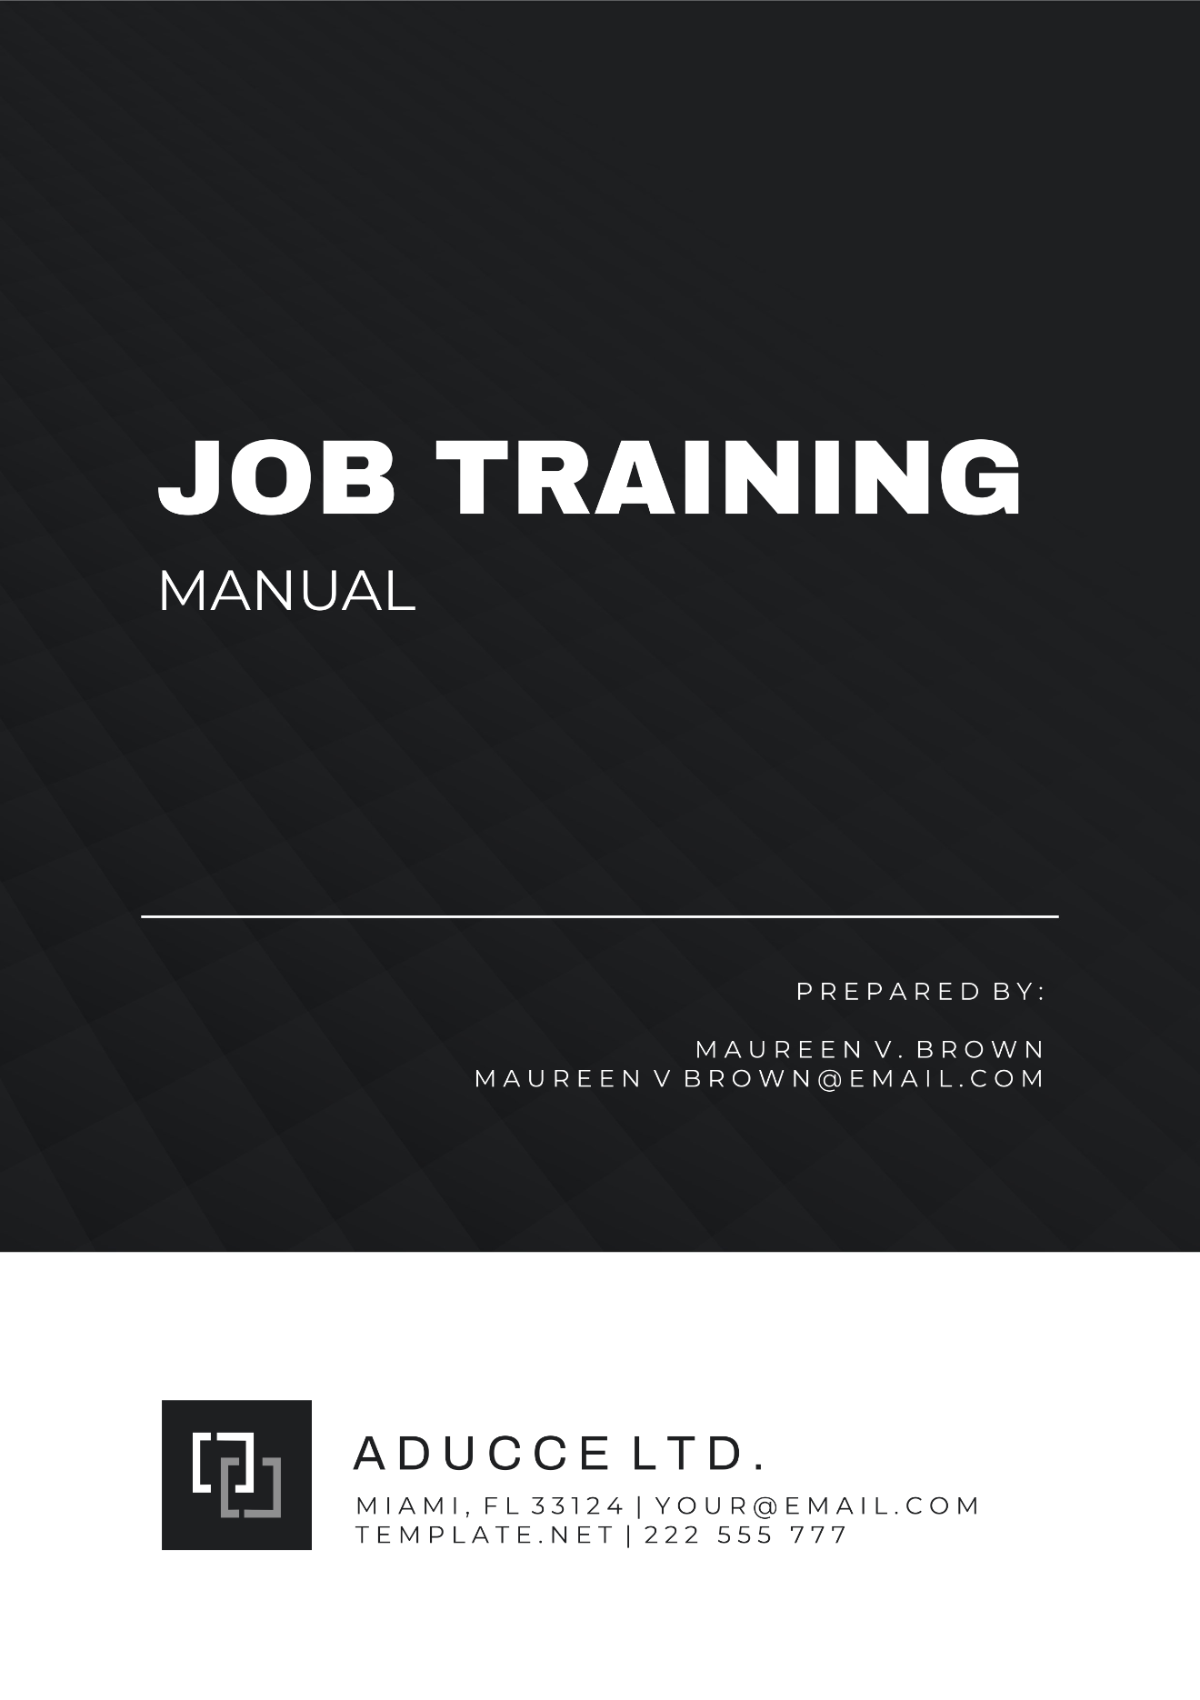 Job Training Manual Template